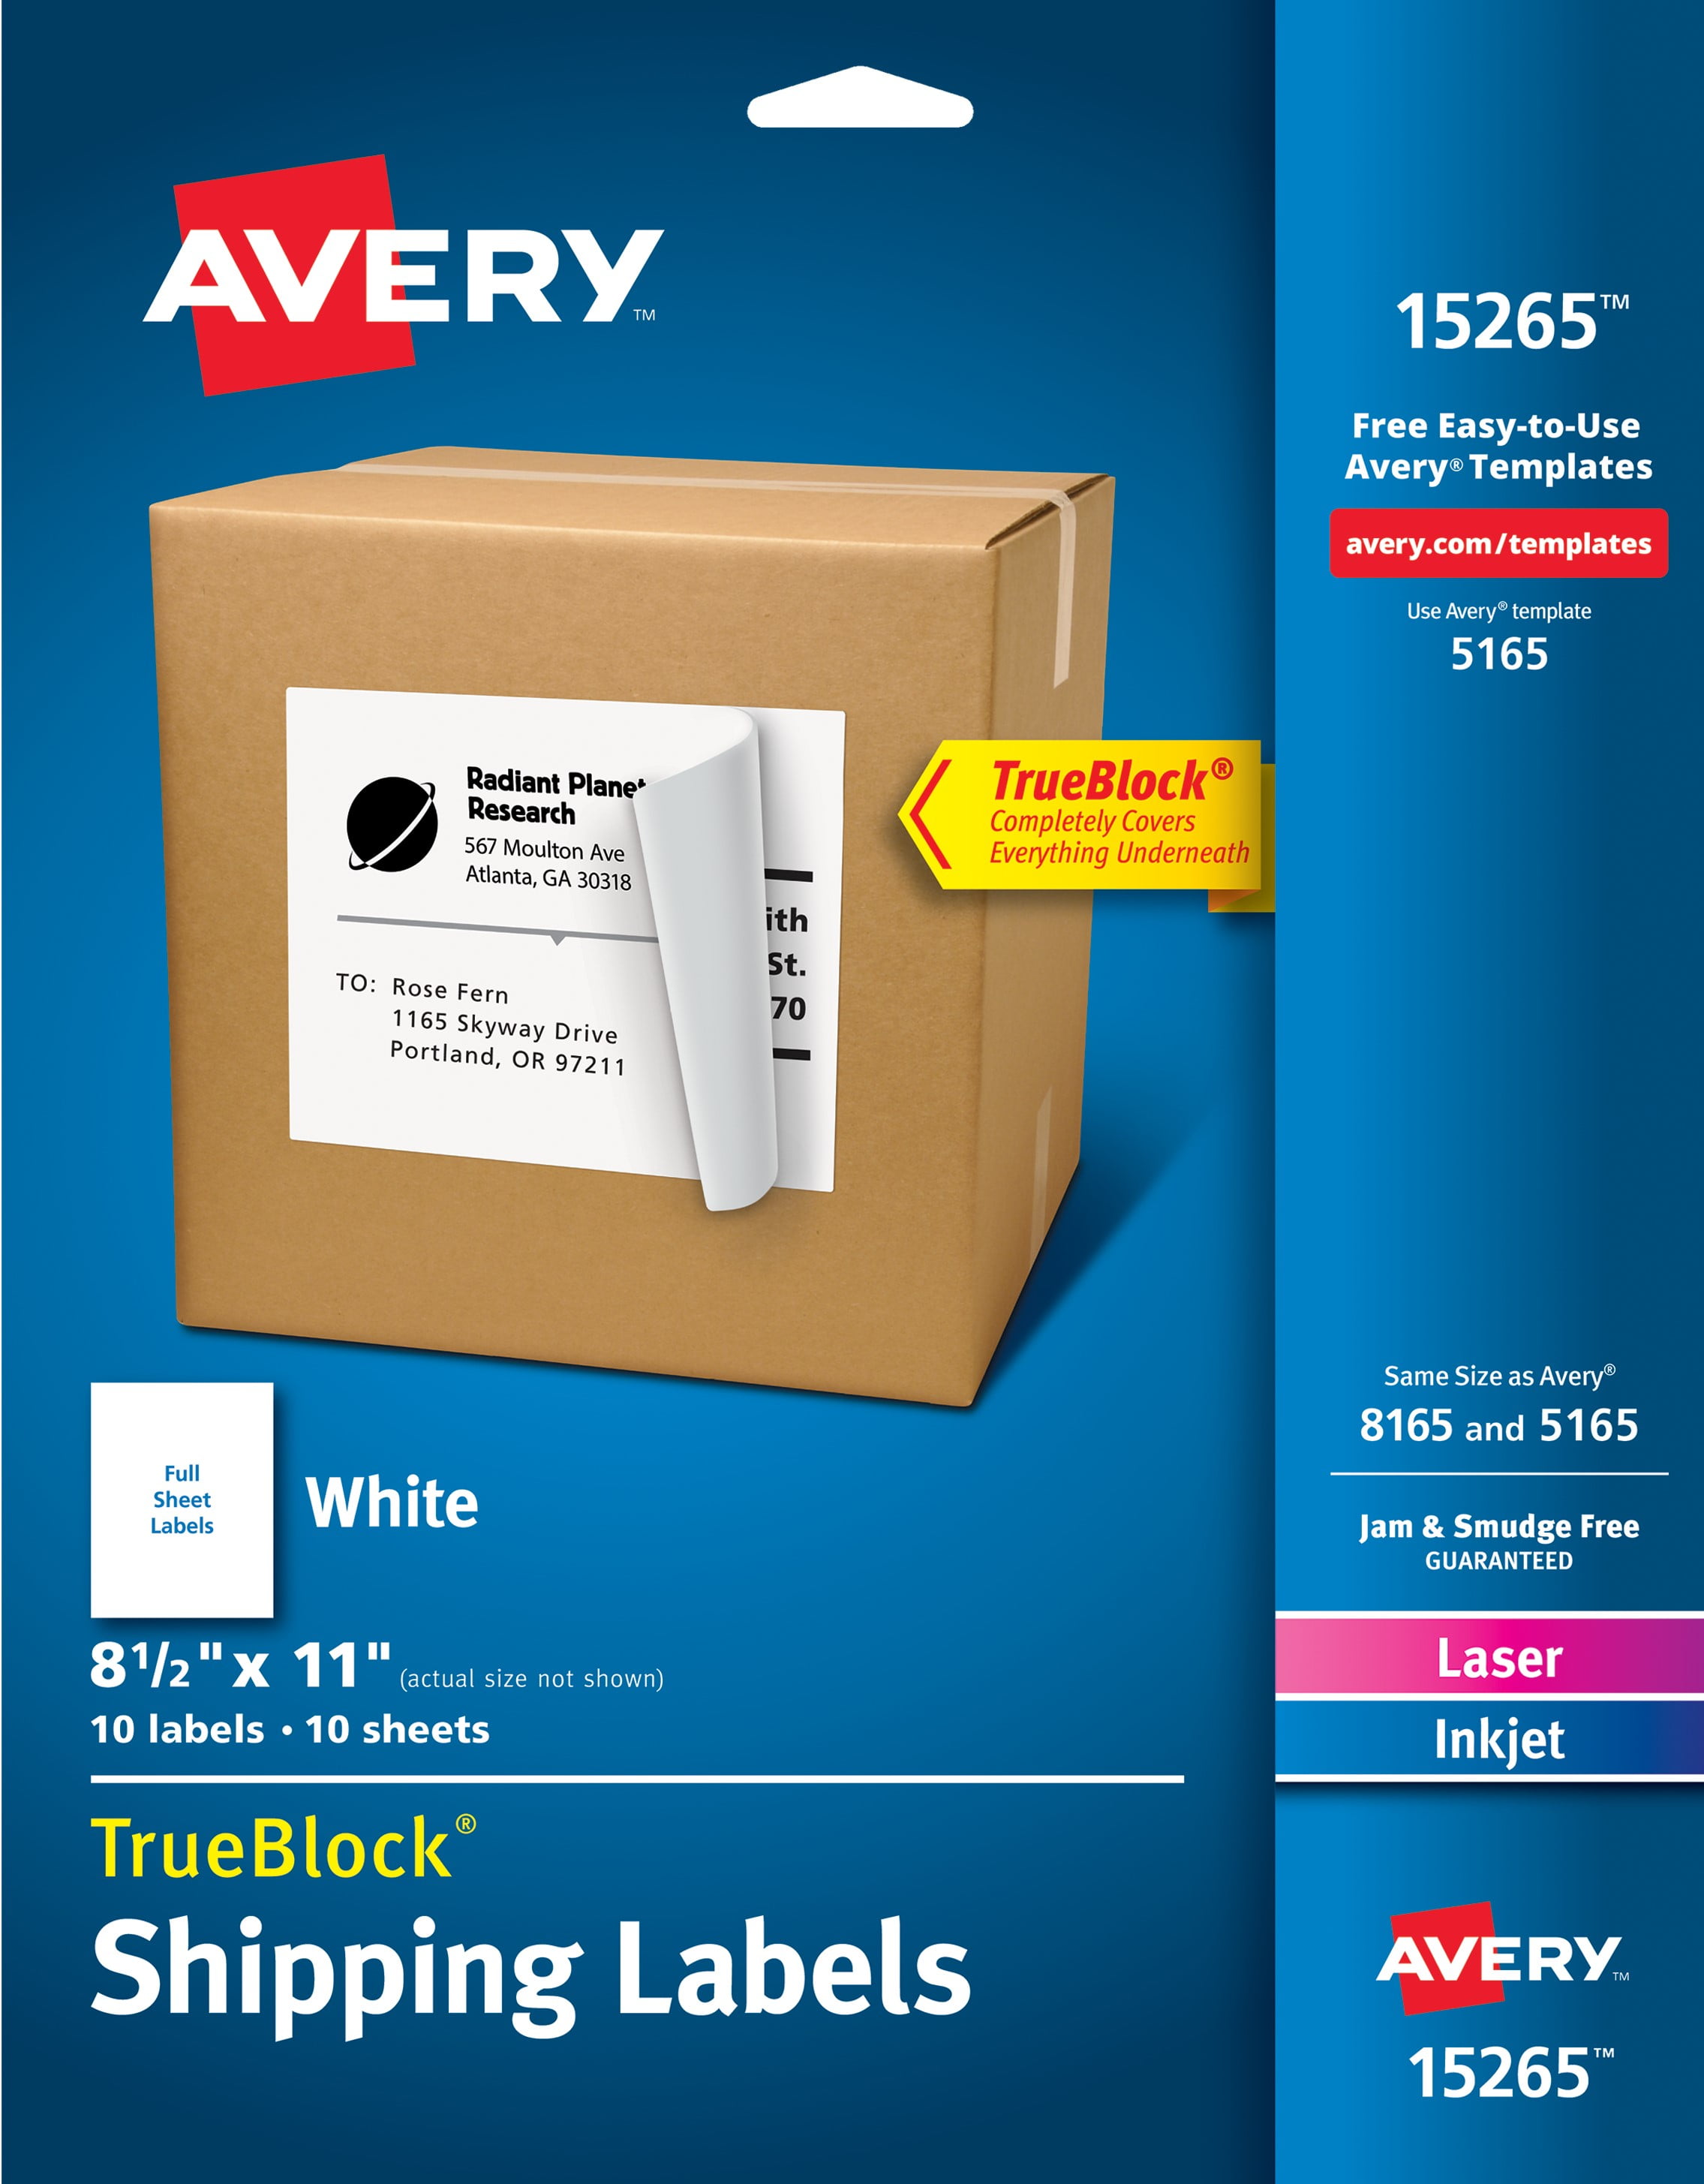 White Laser Avery PRES-a-ply 8 1/2" x 11" 1 Label/Sheet 100 Sheets/Box 